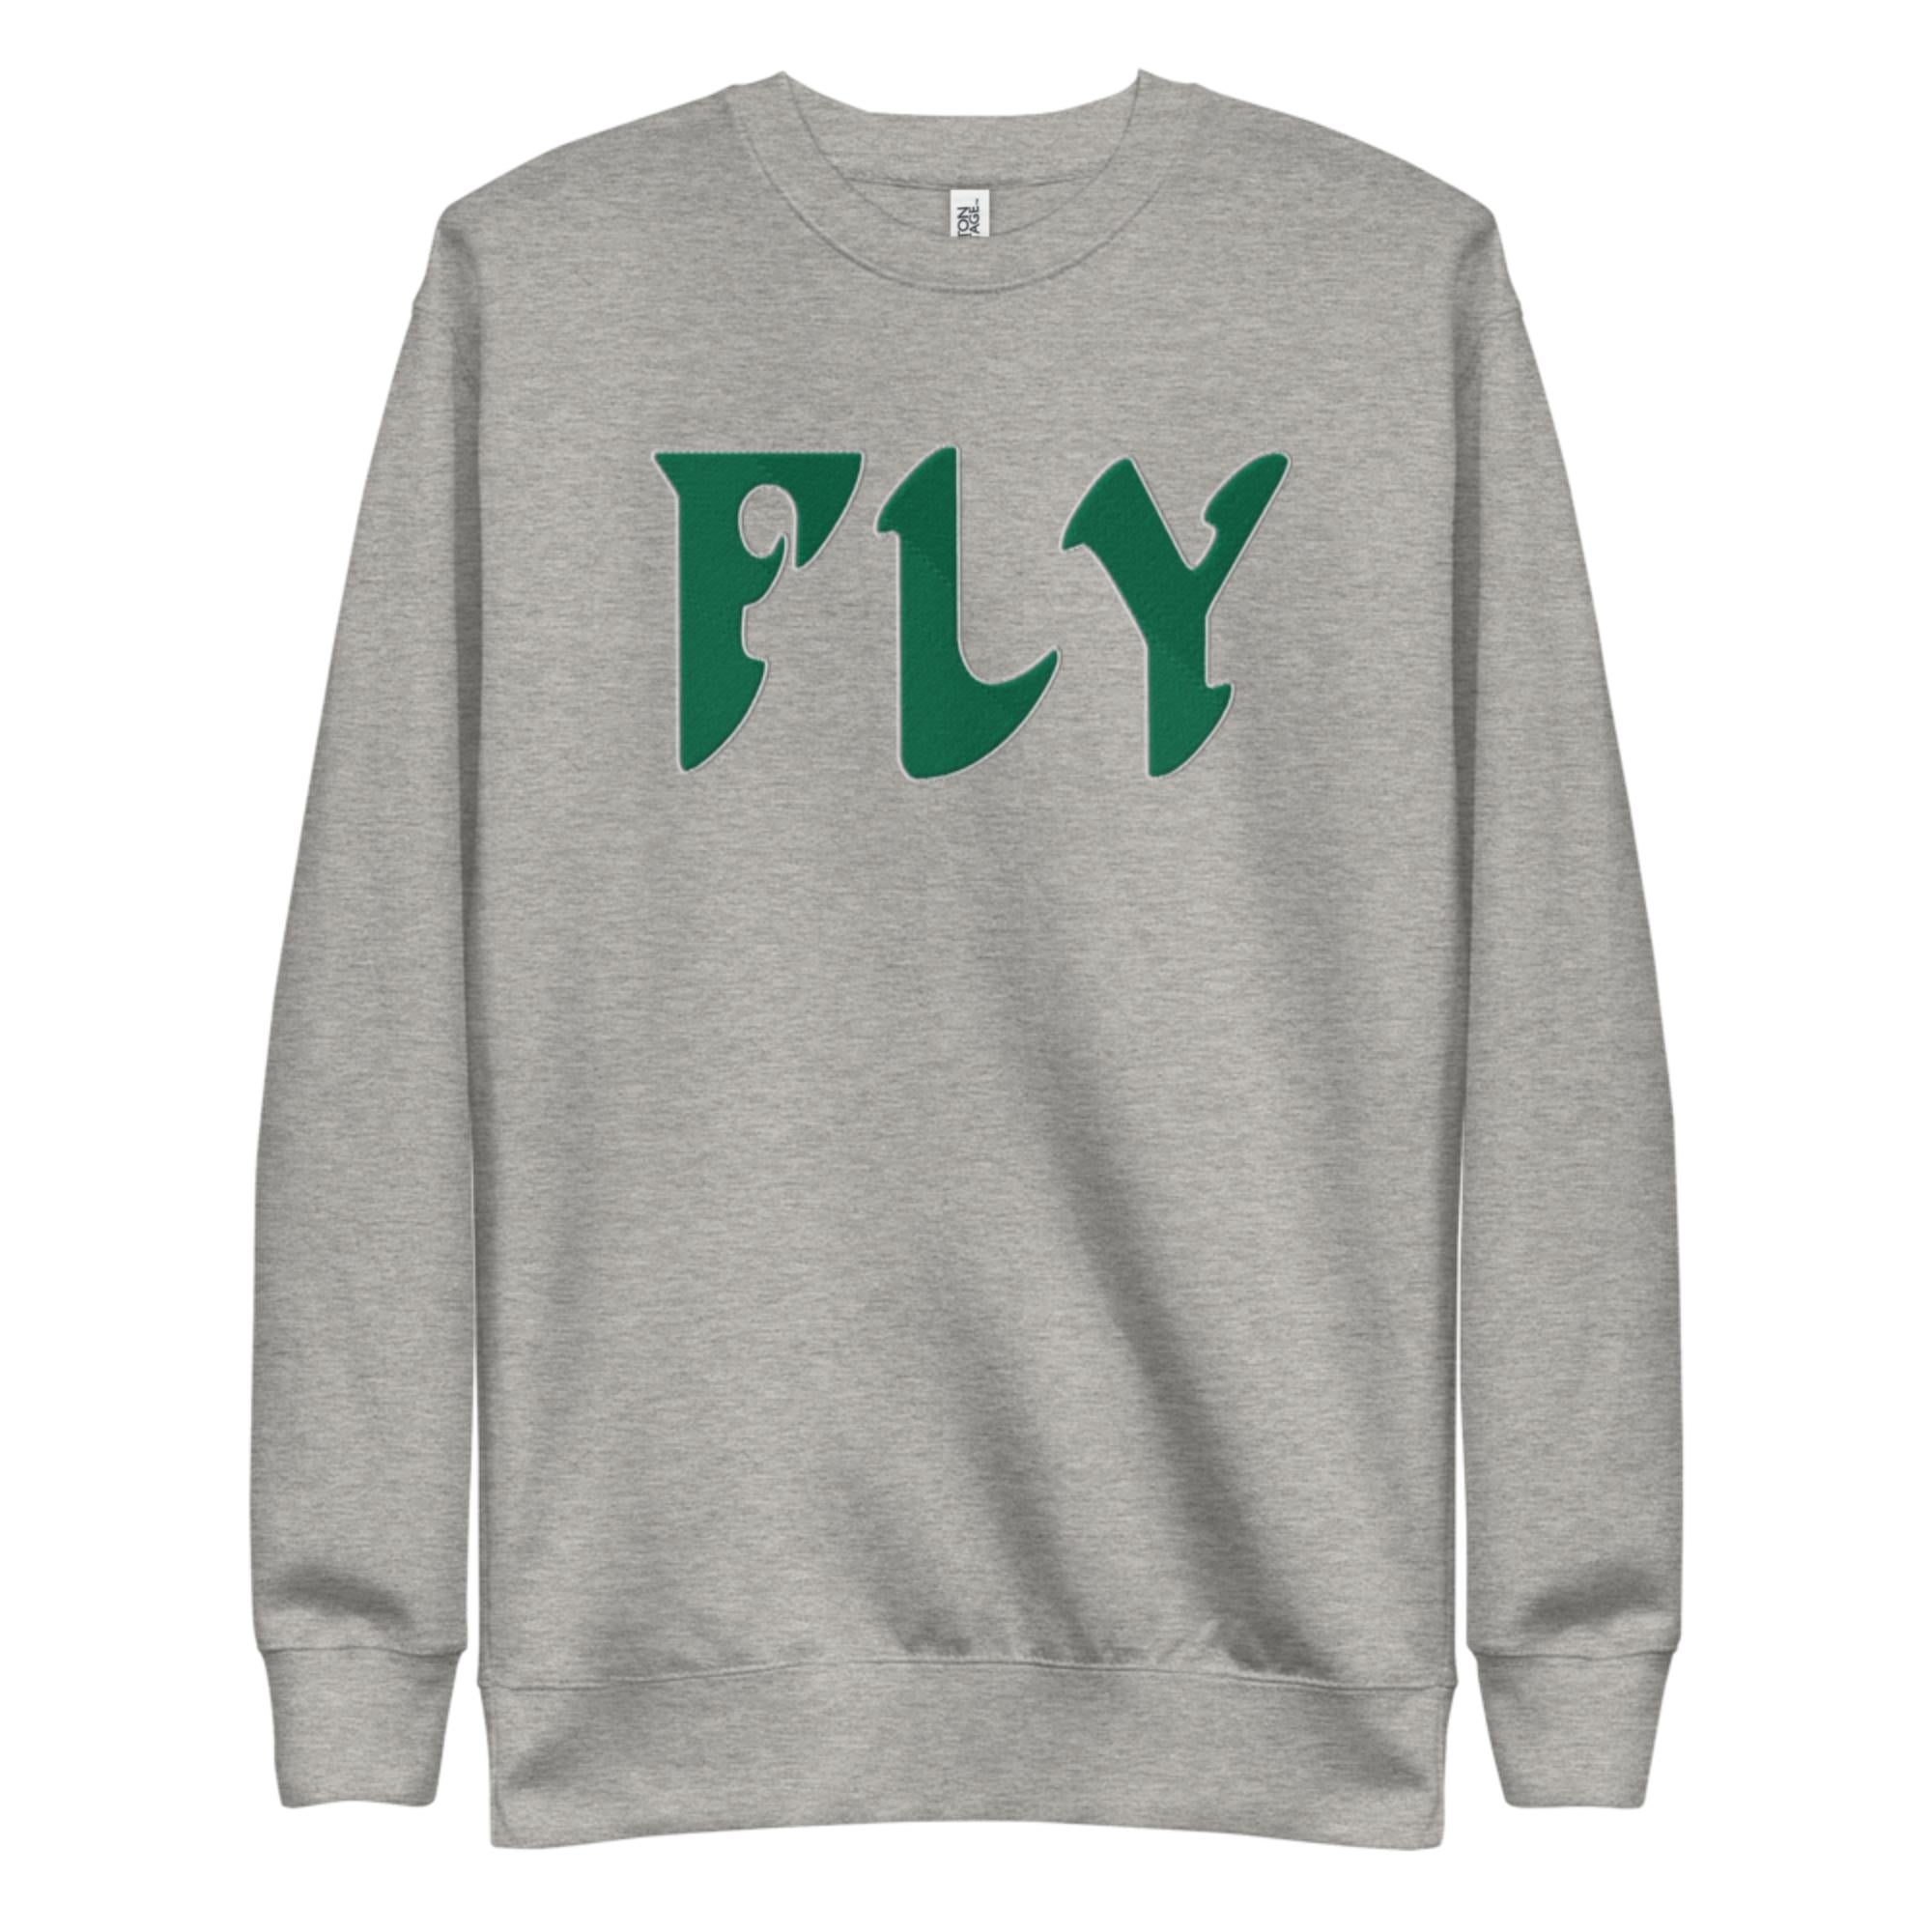 "FLY" Embroidered Sweatshirt